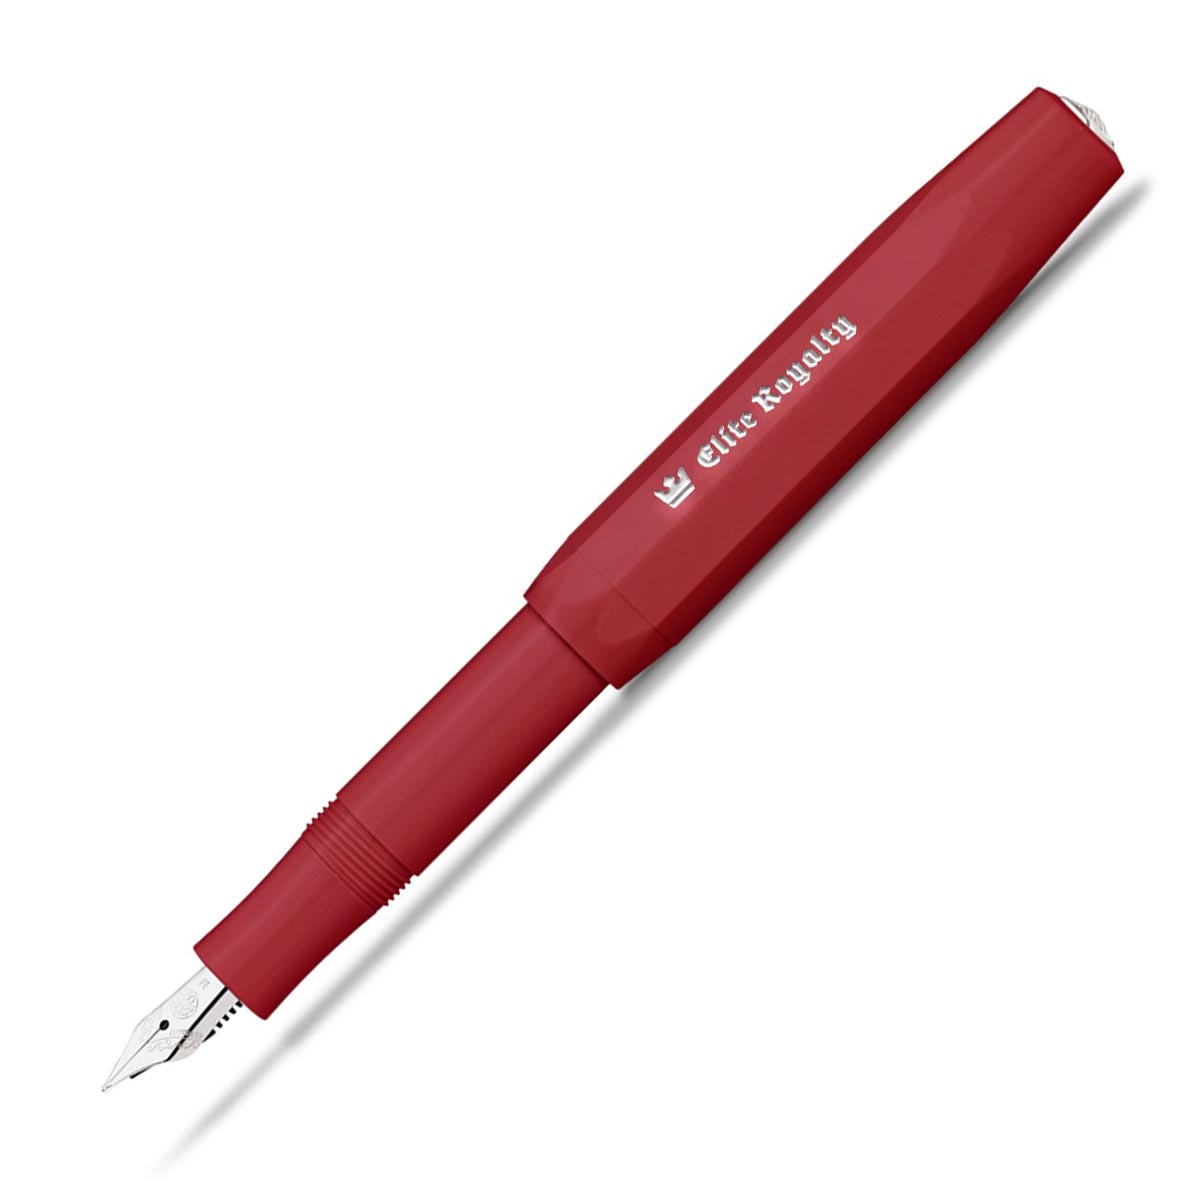 Kaweco Skyline Sport ballpoint pen review - The Pen Company Blog